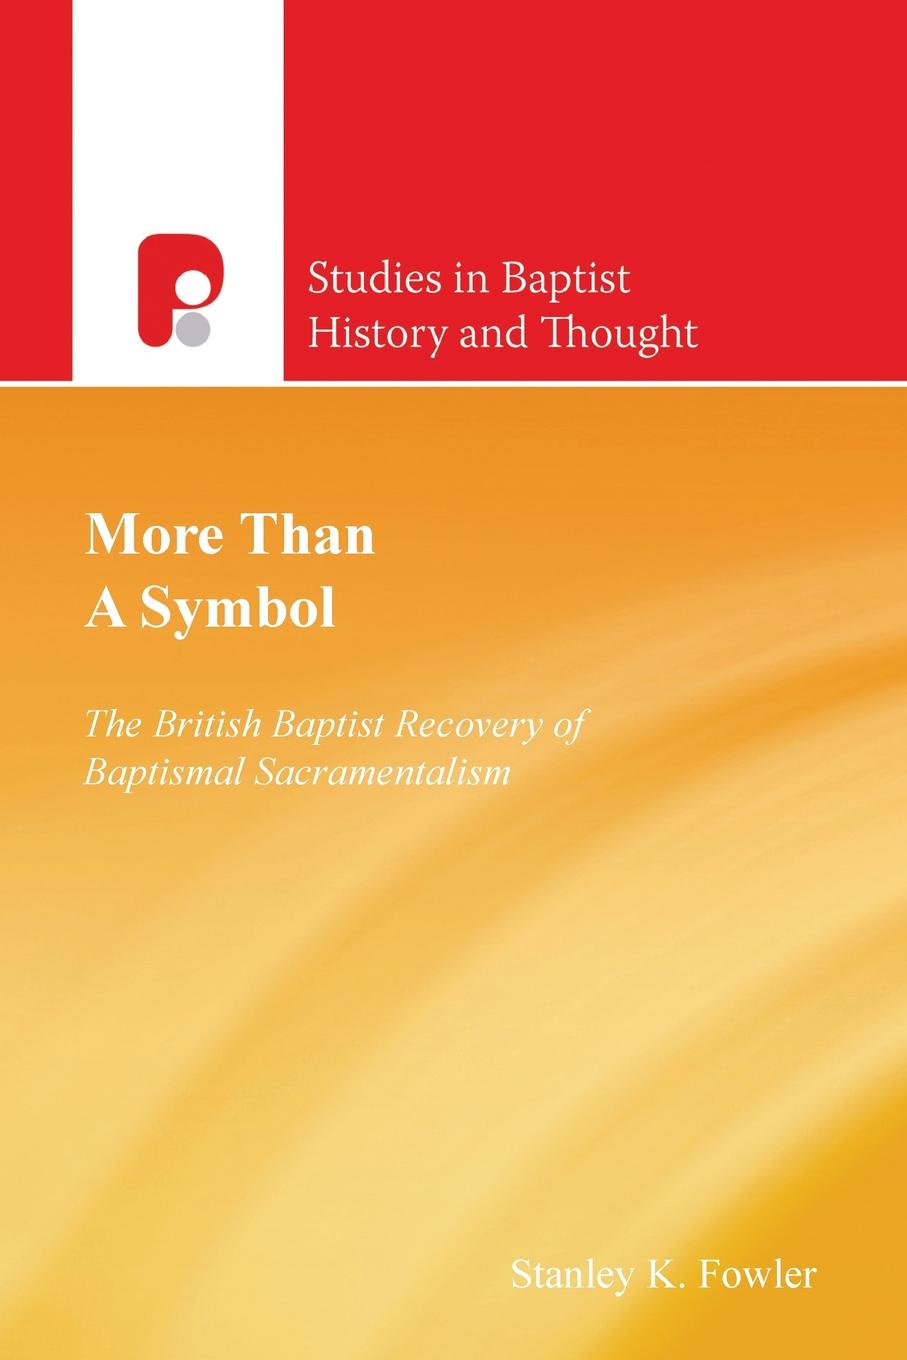 More Than a Symbol. The British Baptist Recovery of Baptismal Sacramentalism